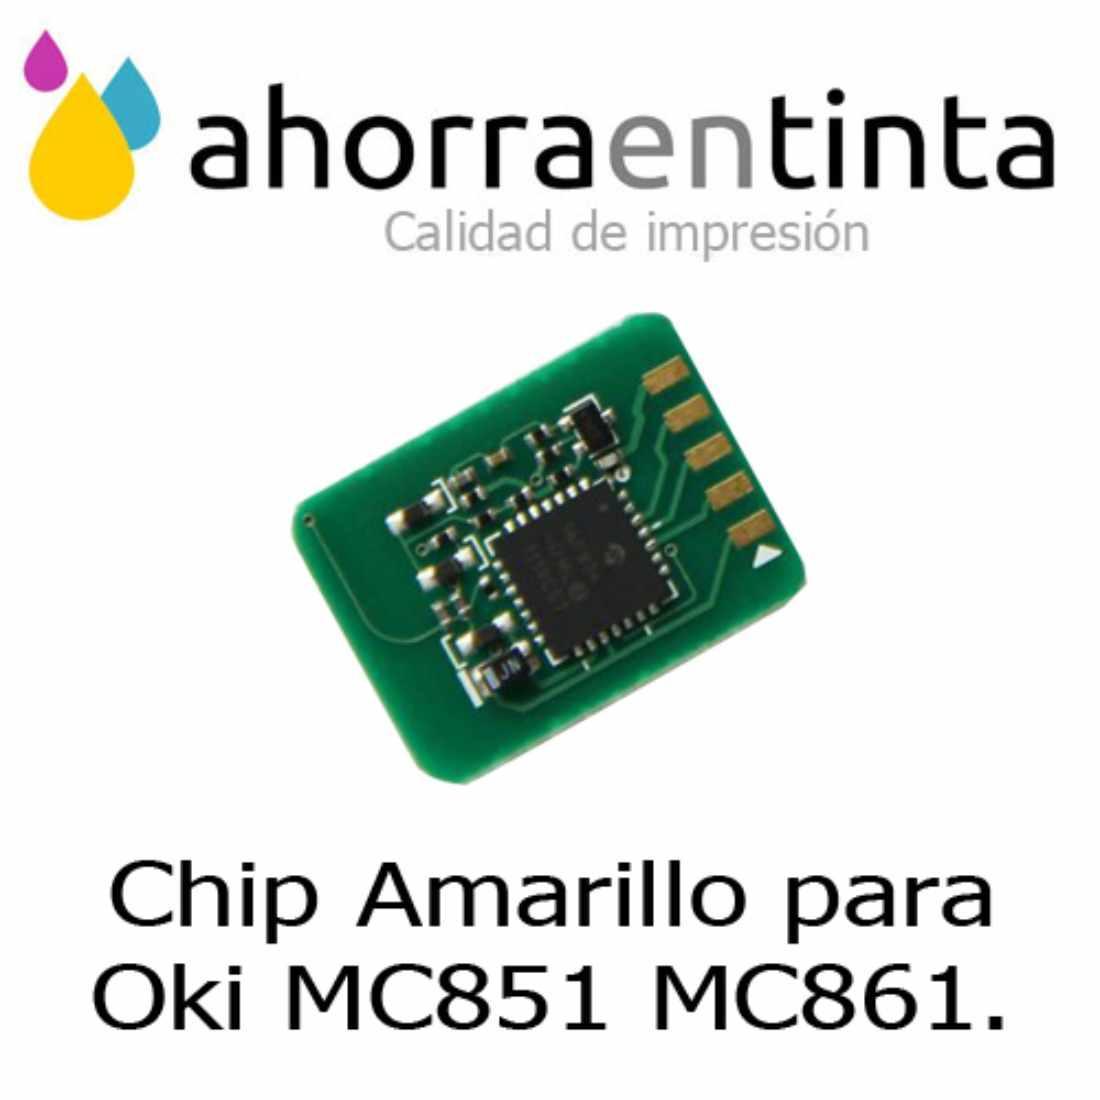 Foto de producto Chip Amarillo para Oki MC851 M